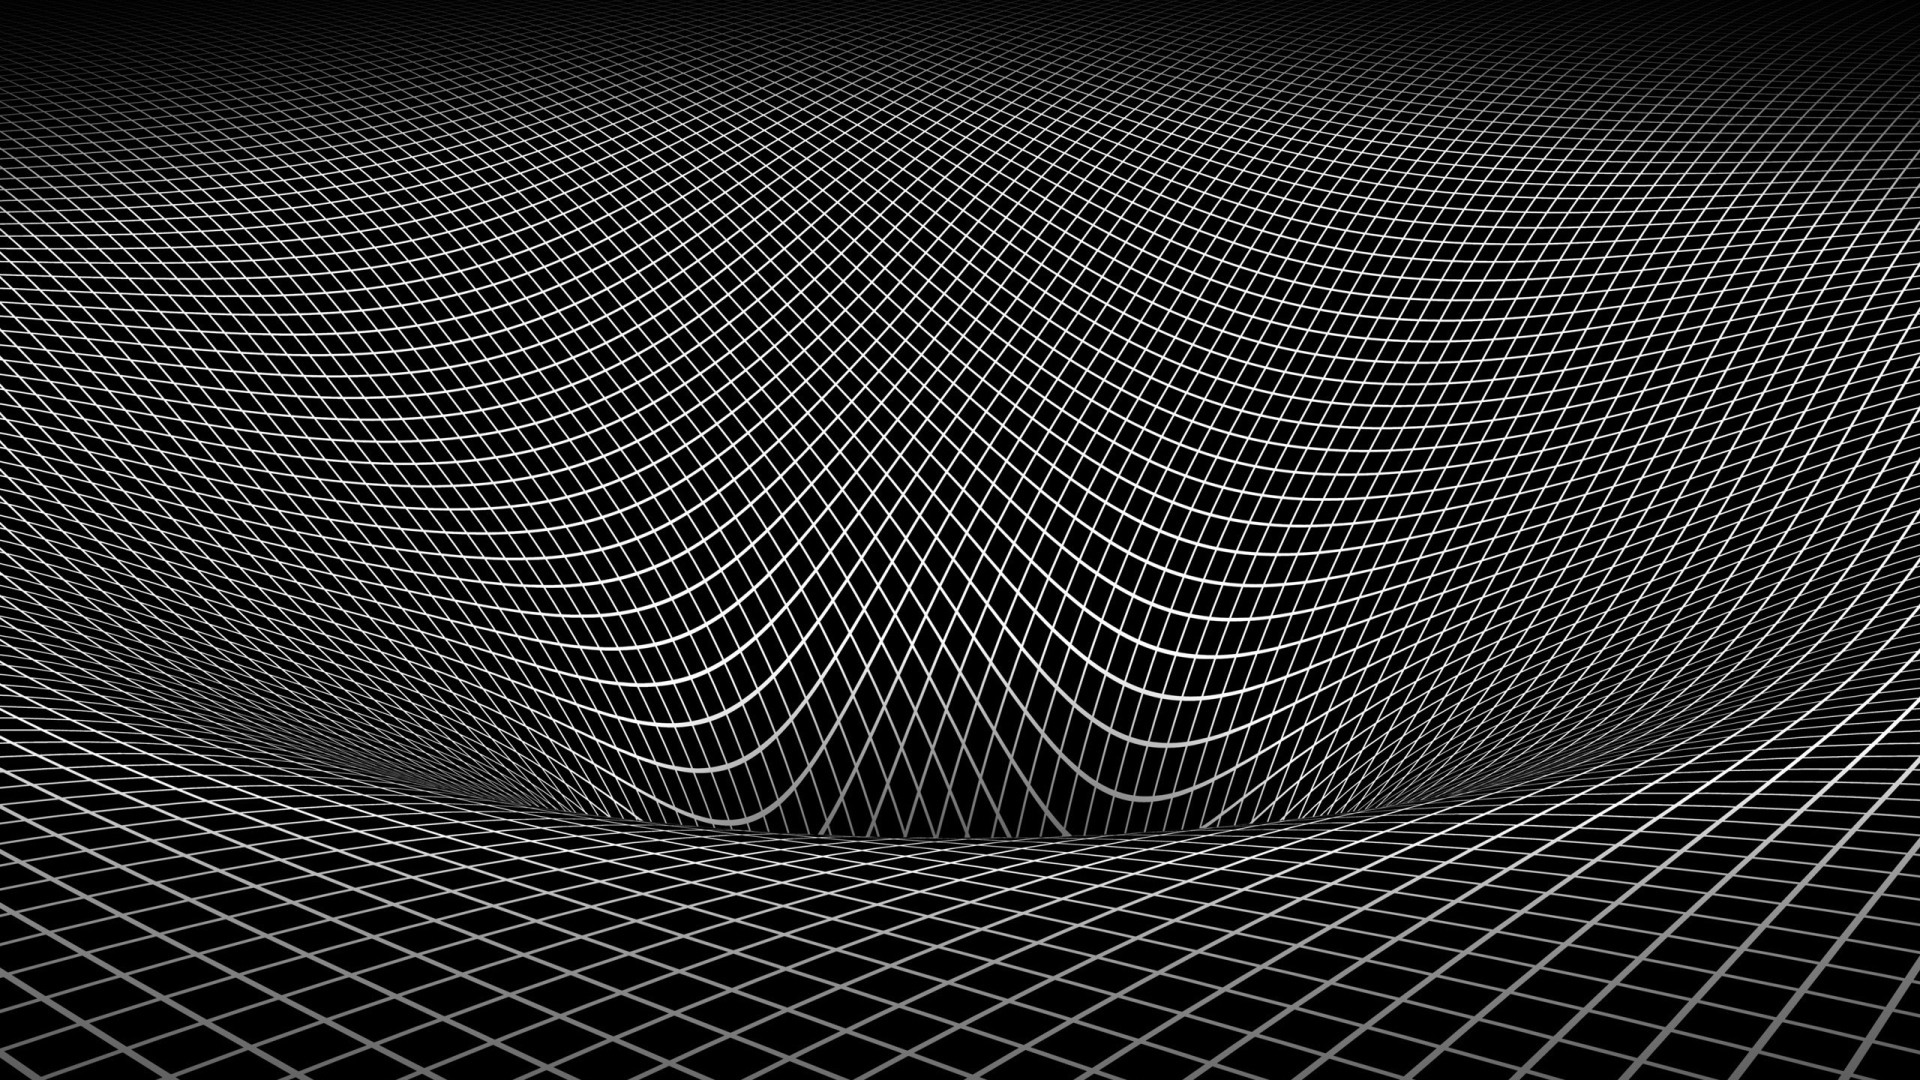 Quantum Computer Wallpapers